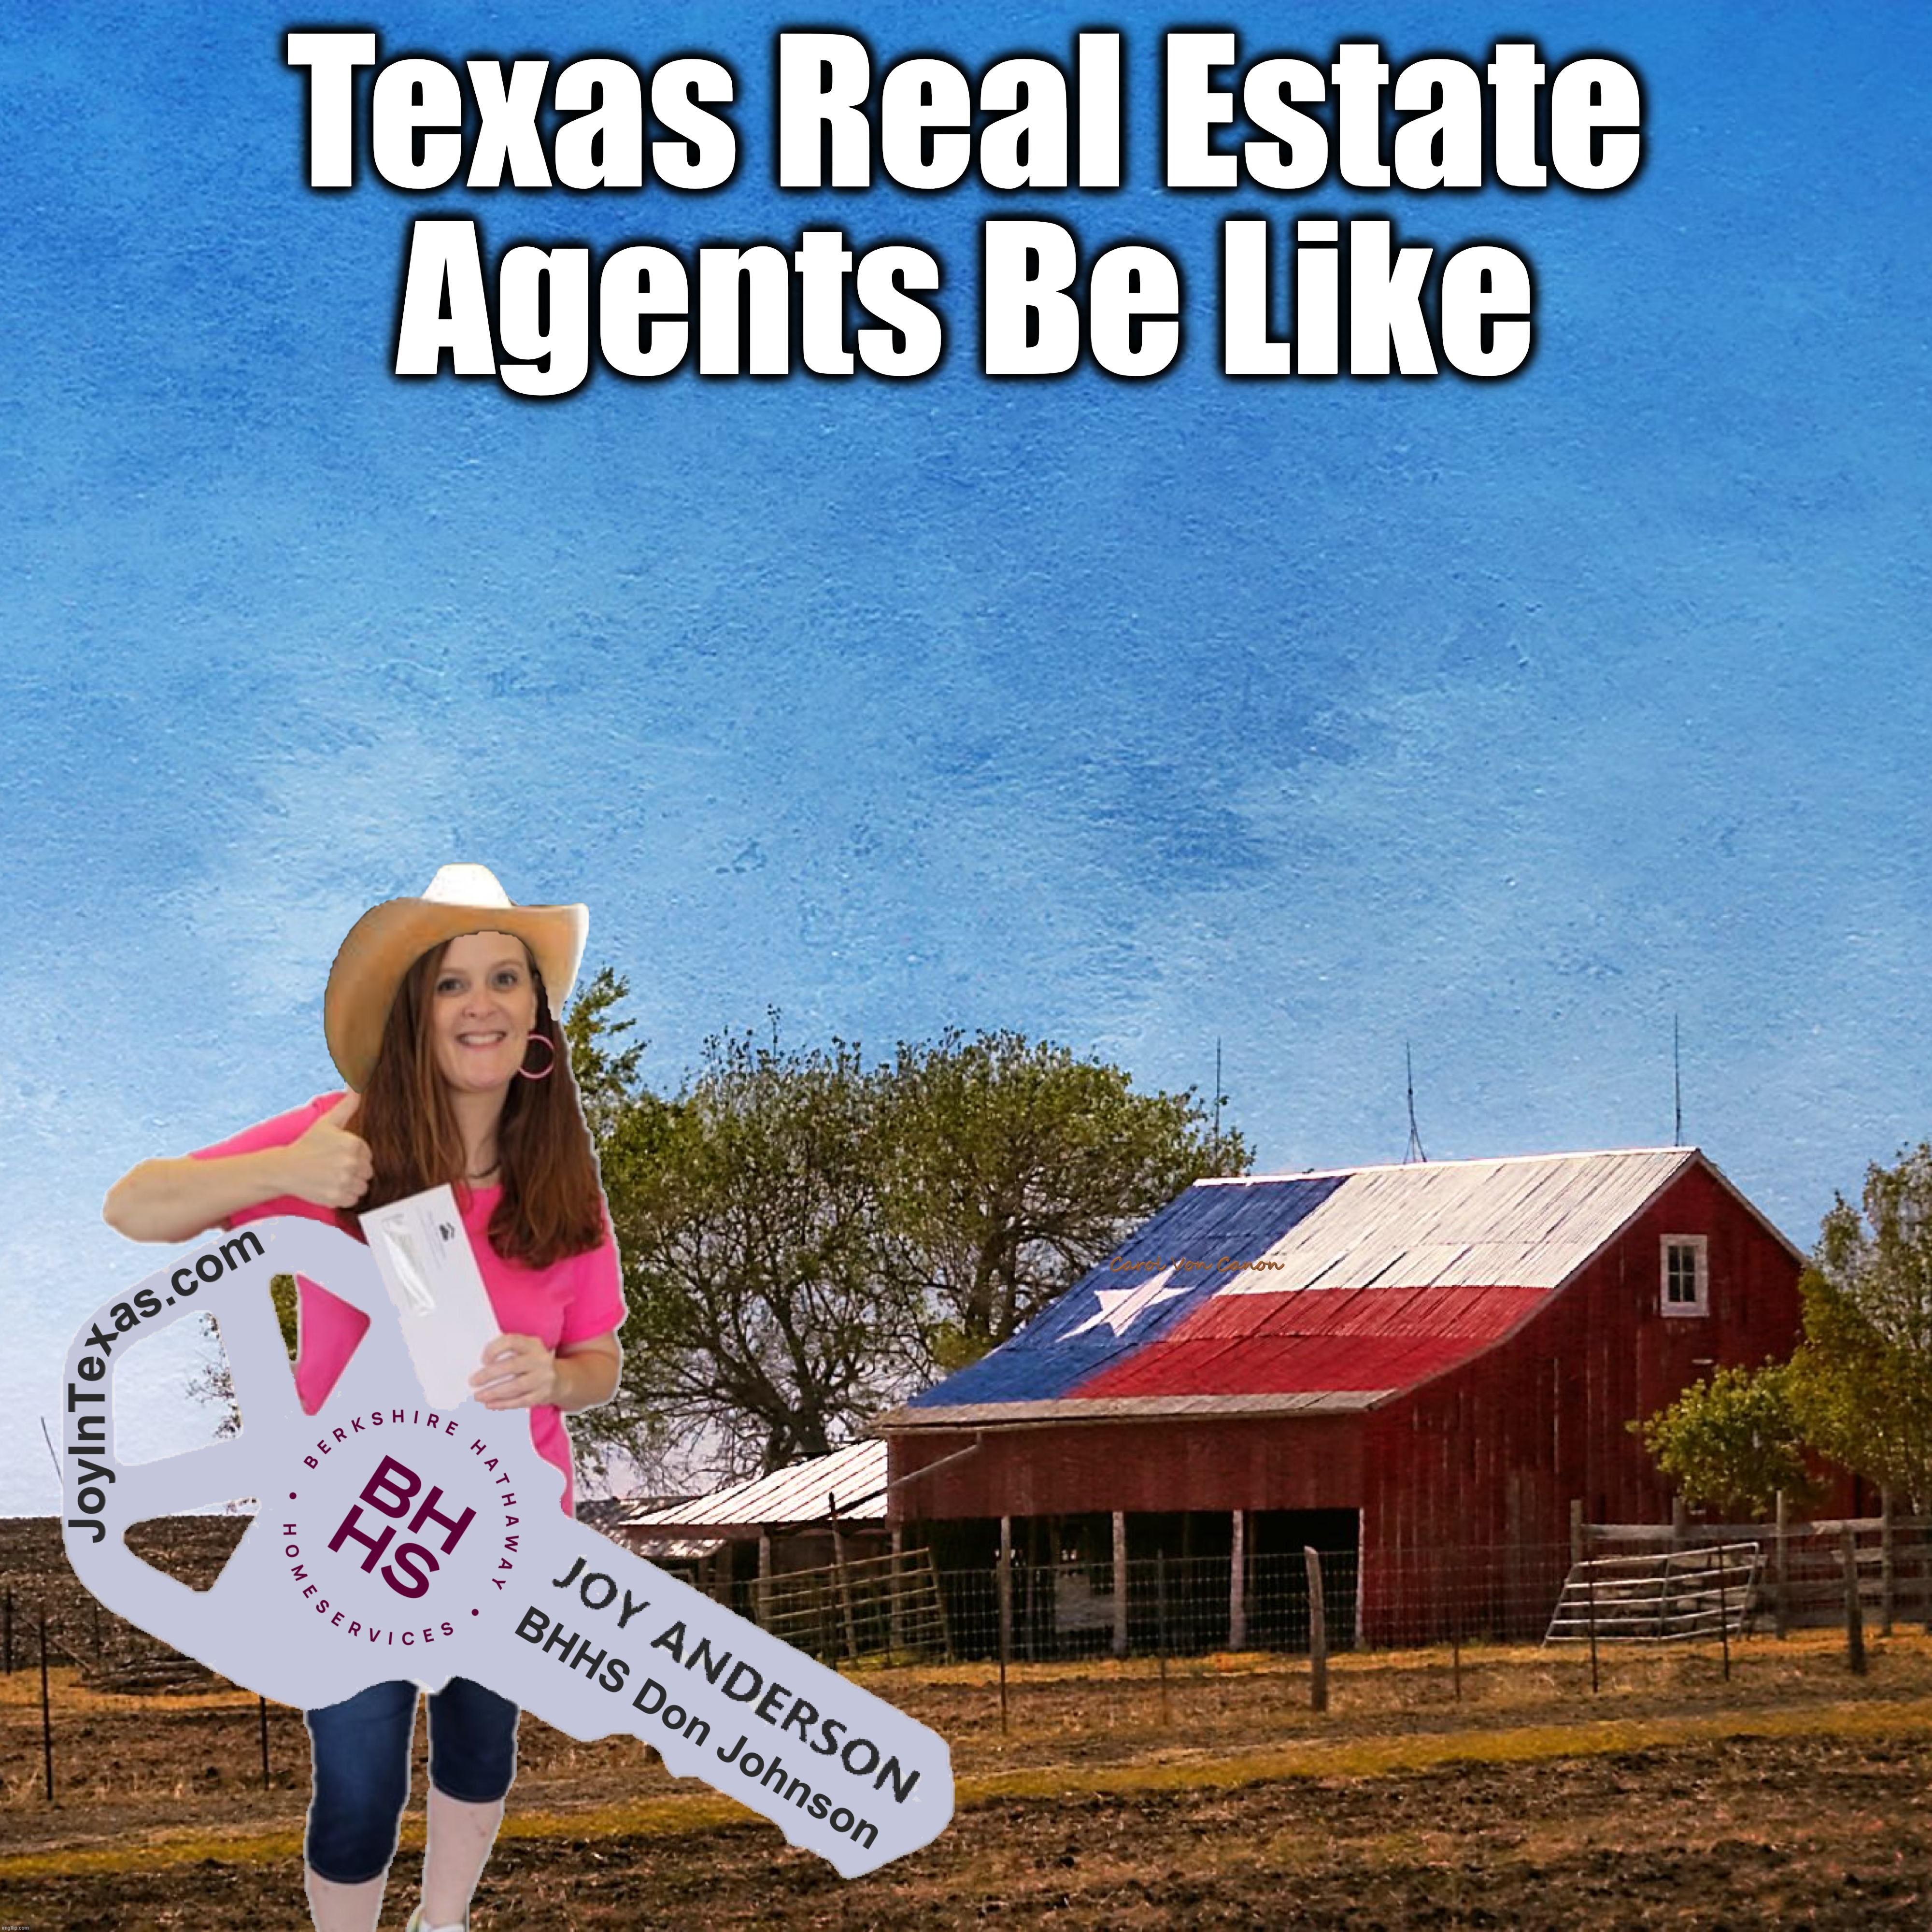 Texas Real Estate Agents Be Like... | Texas Real Estate
Agents Be Like | image tagged in real estate agent,realtor,joy,texas,house,buy | made w/ Imgflip meme maker